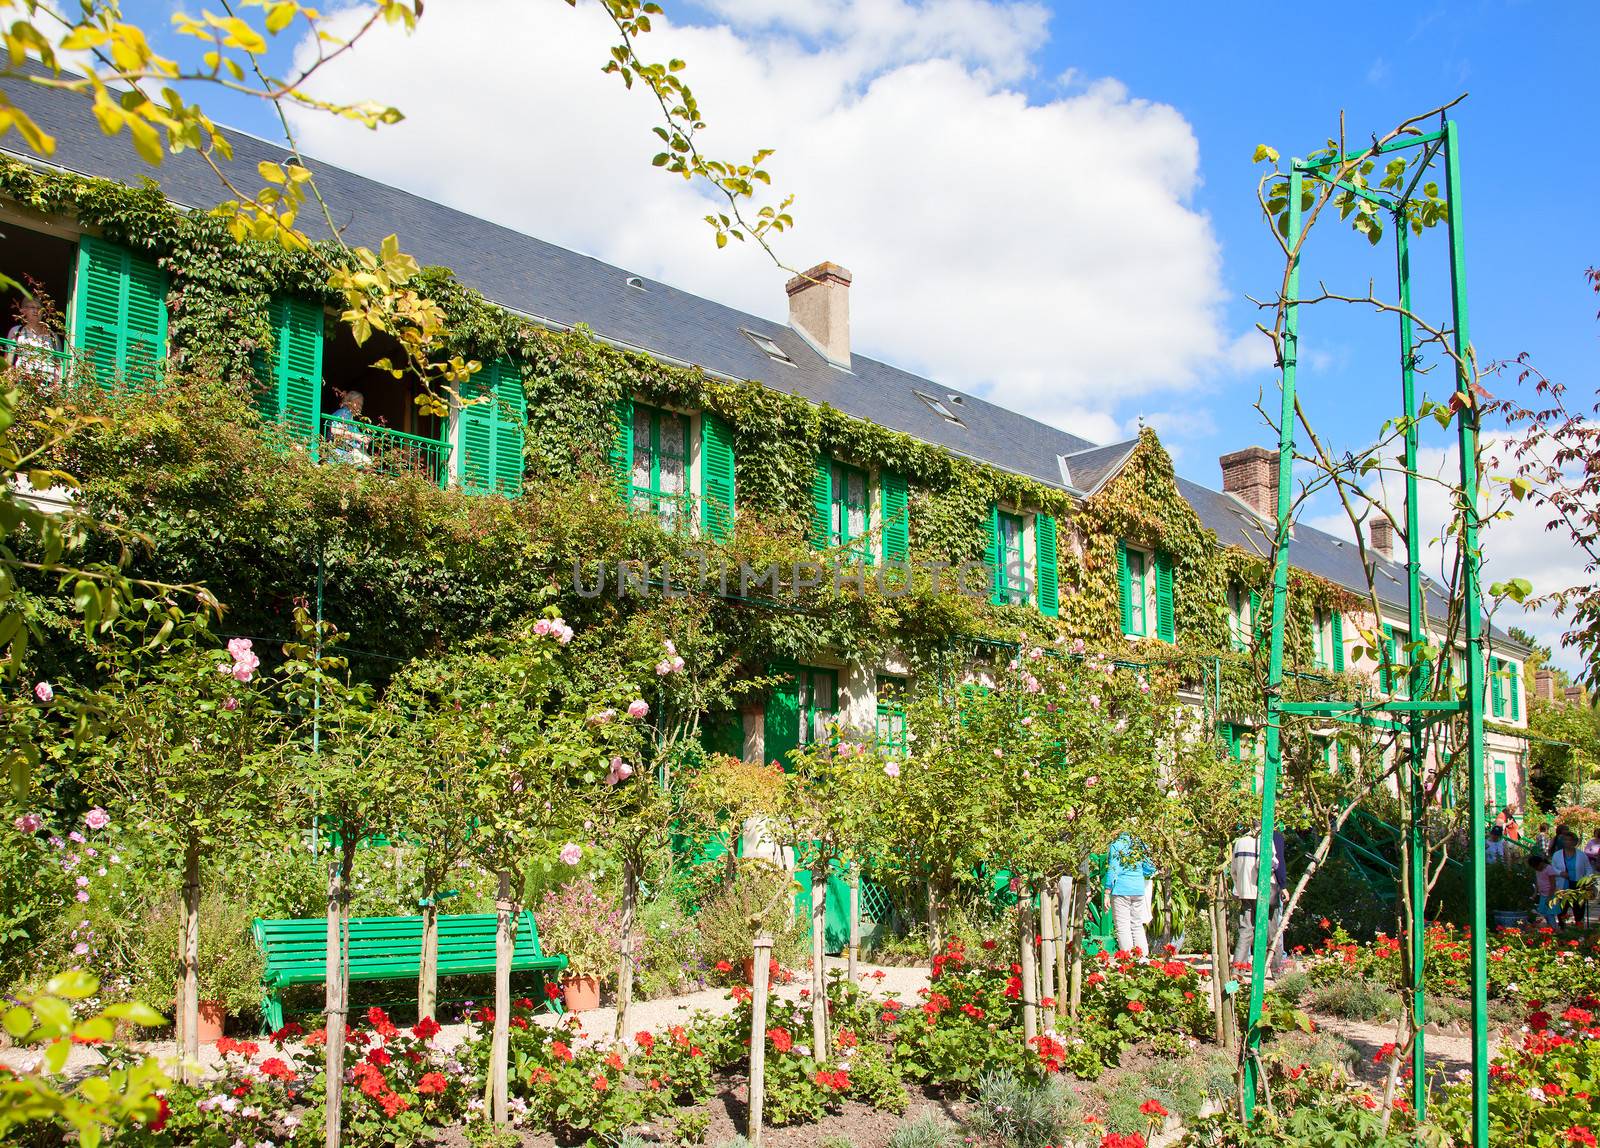 Claude Monet garden and house near Paris by gary718